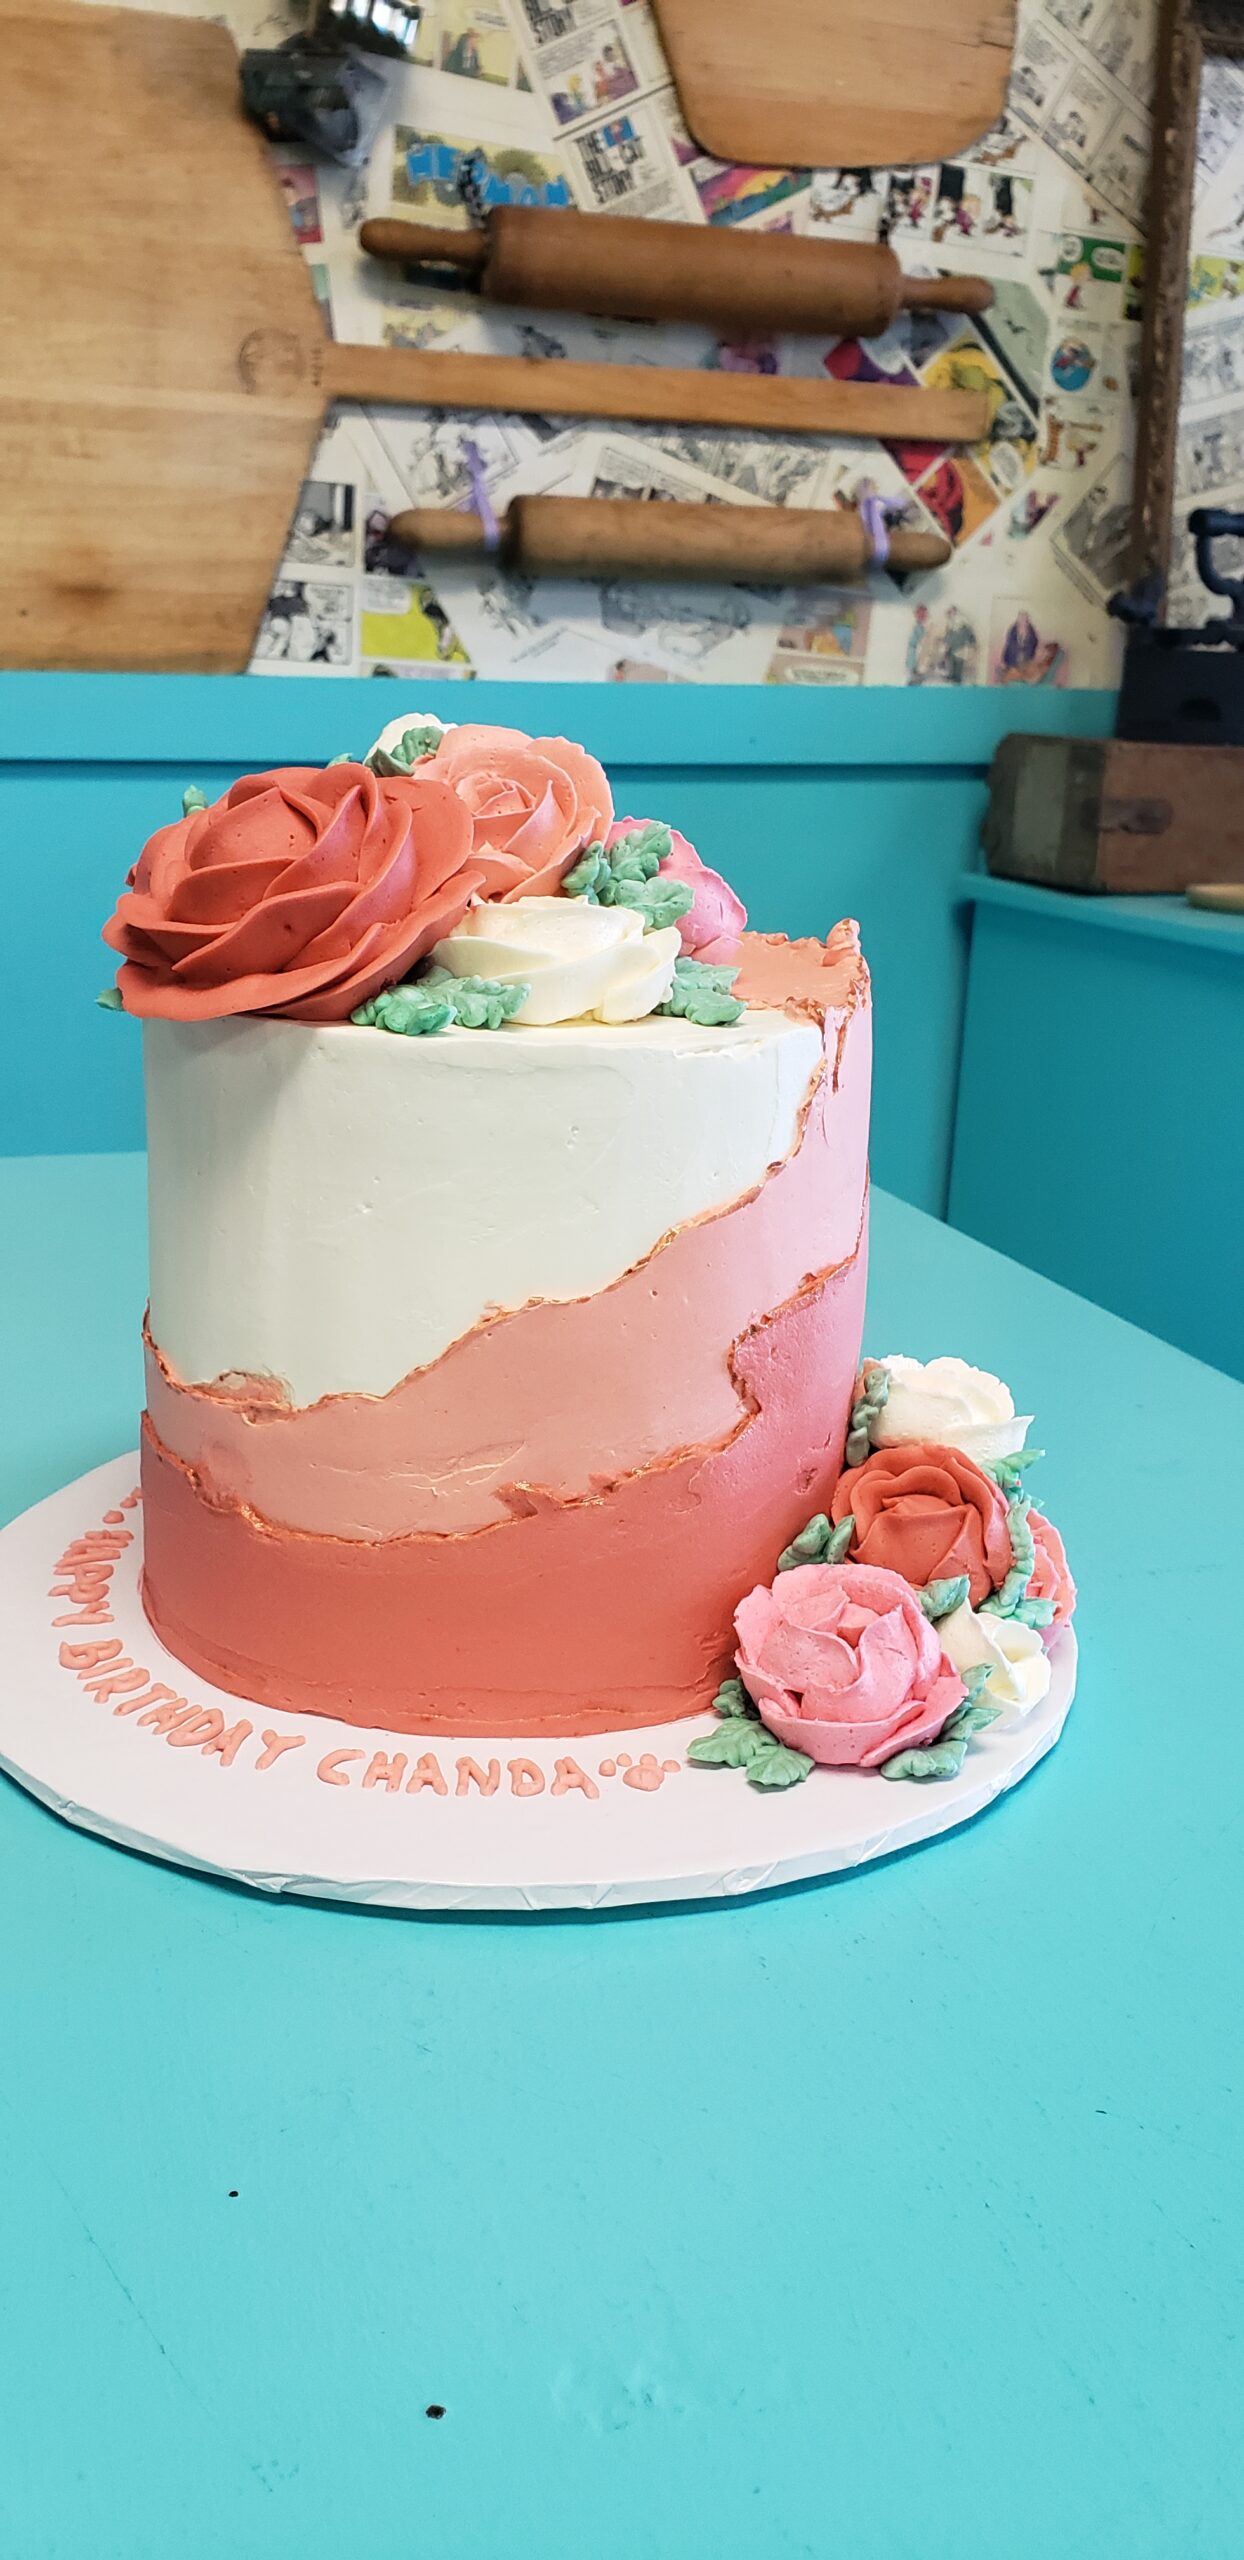 Custom birthday cake